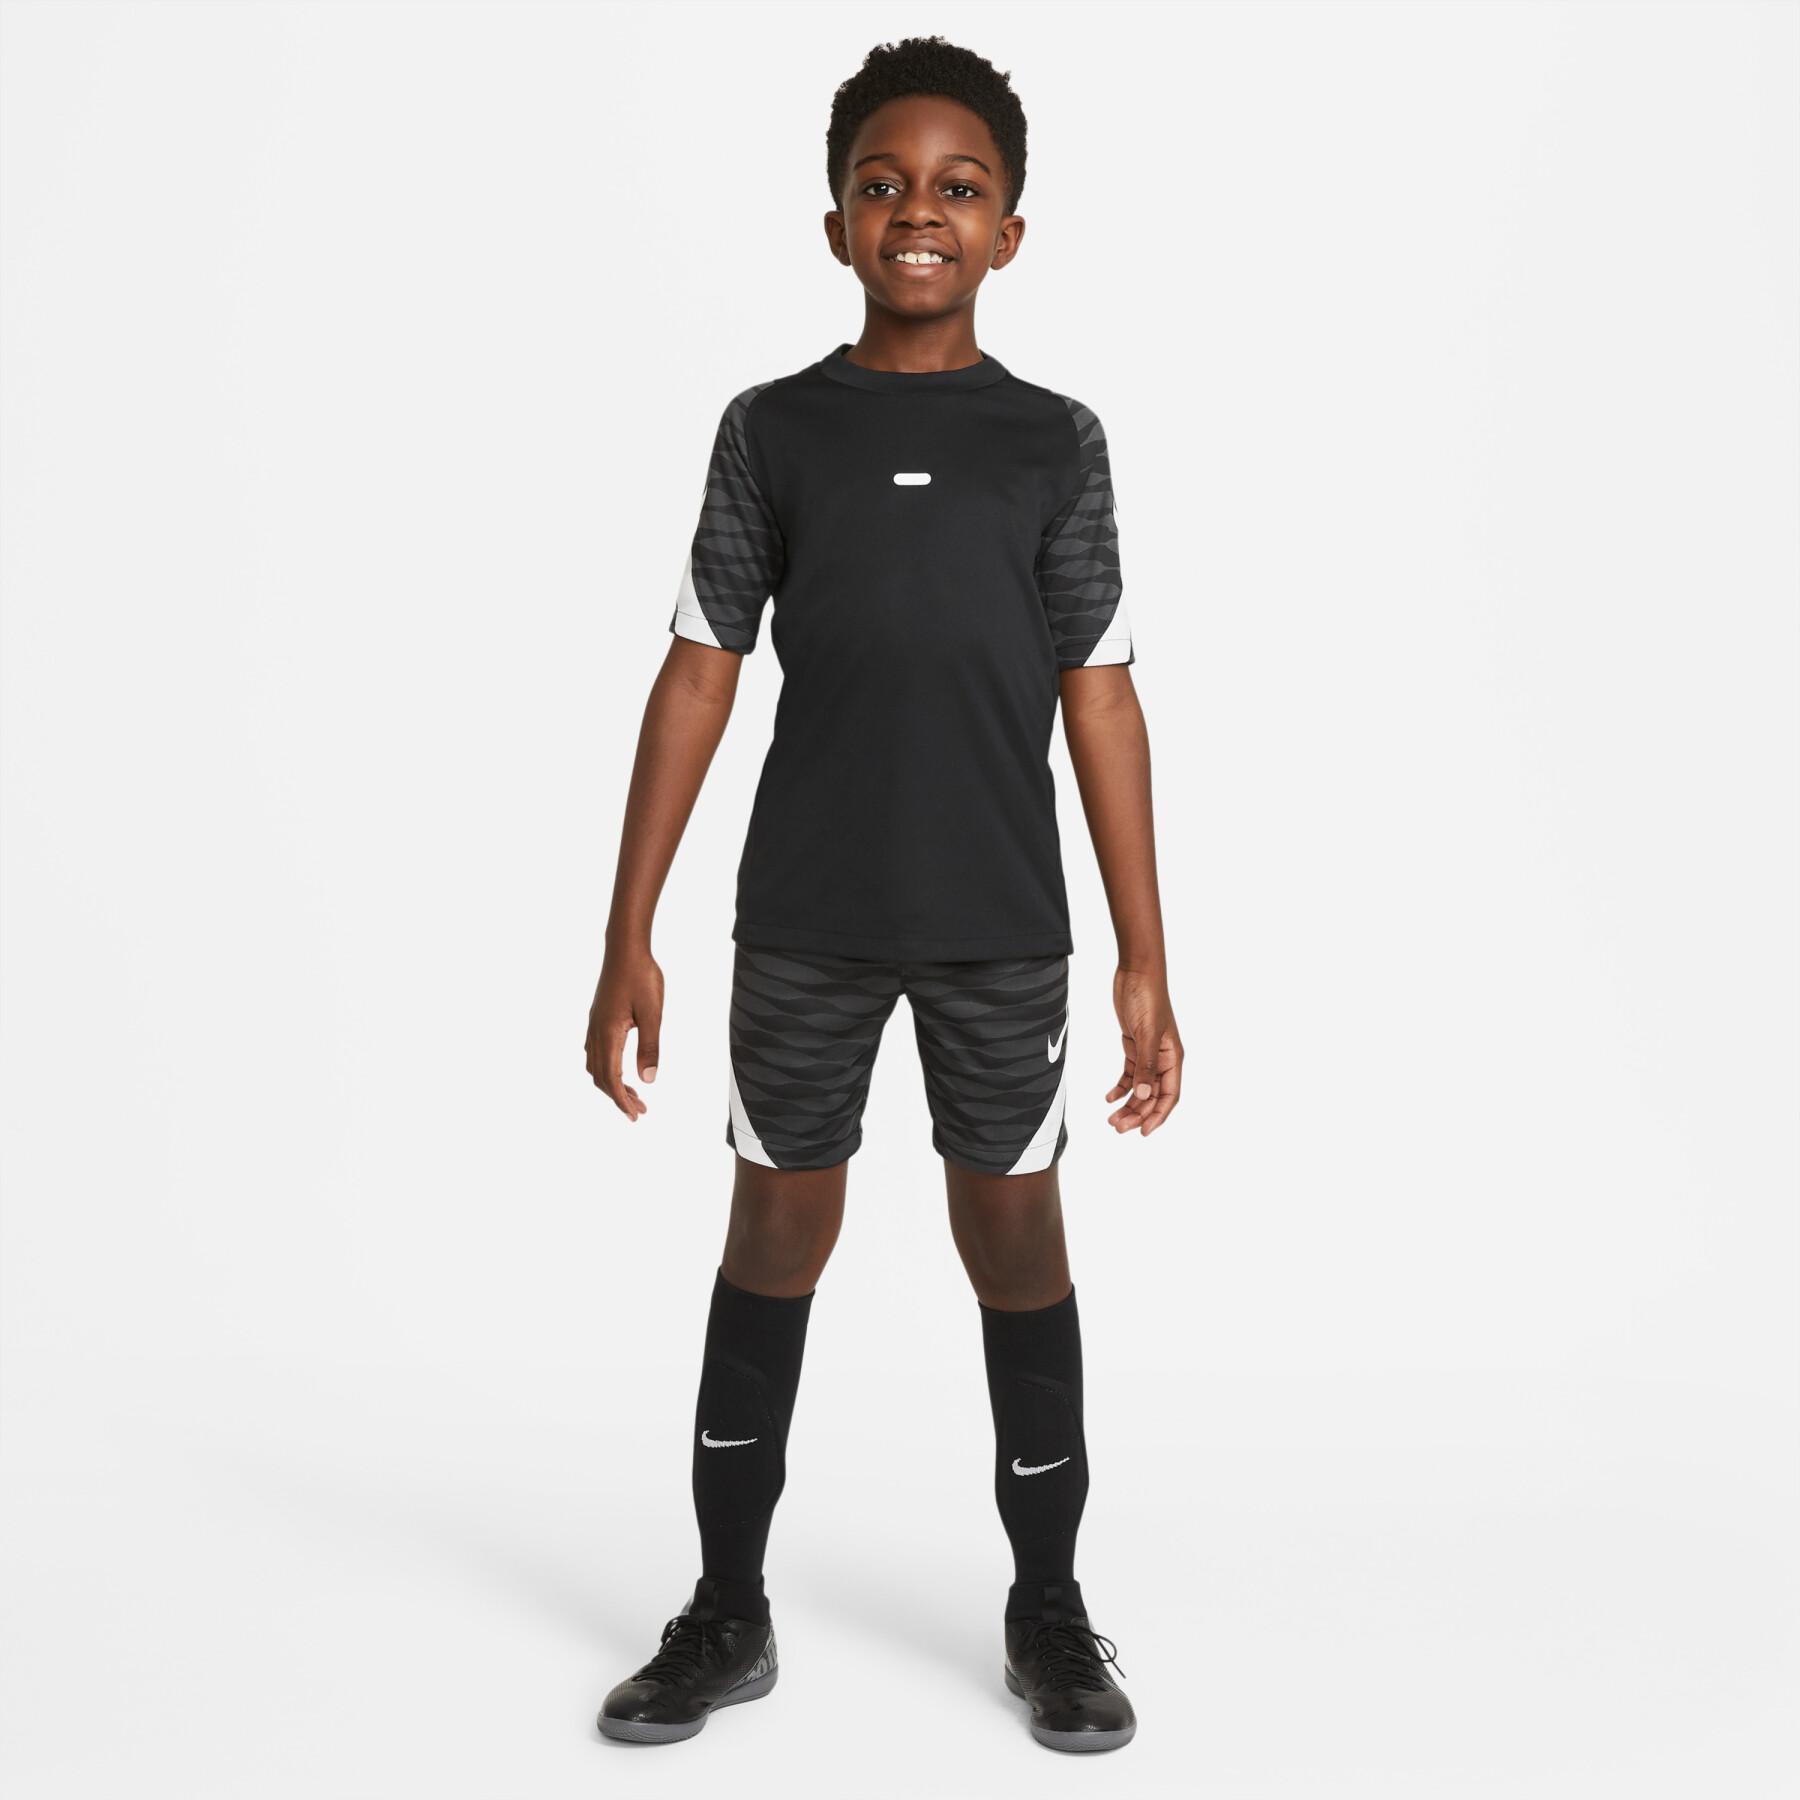 Pantaloncini per bambini Nike Dynamic Fit StrikeE21